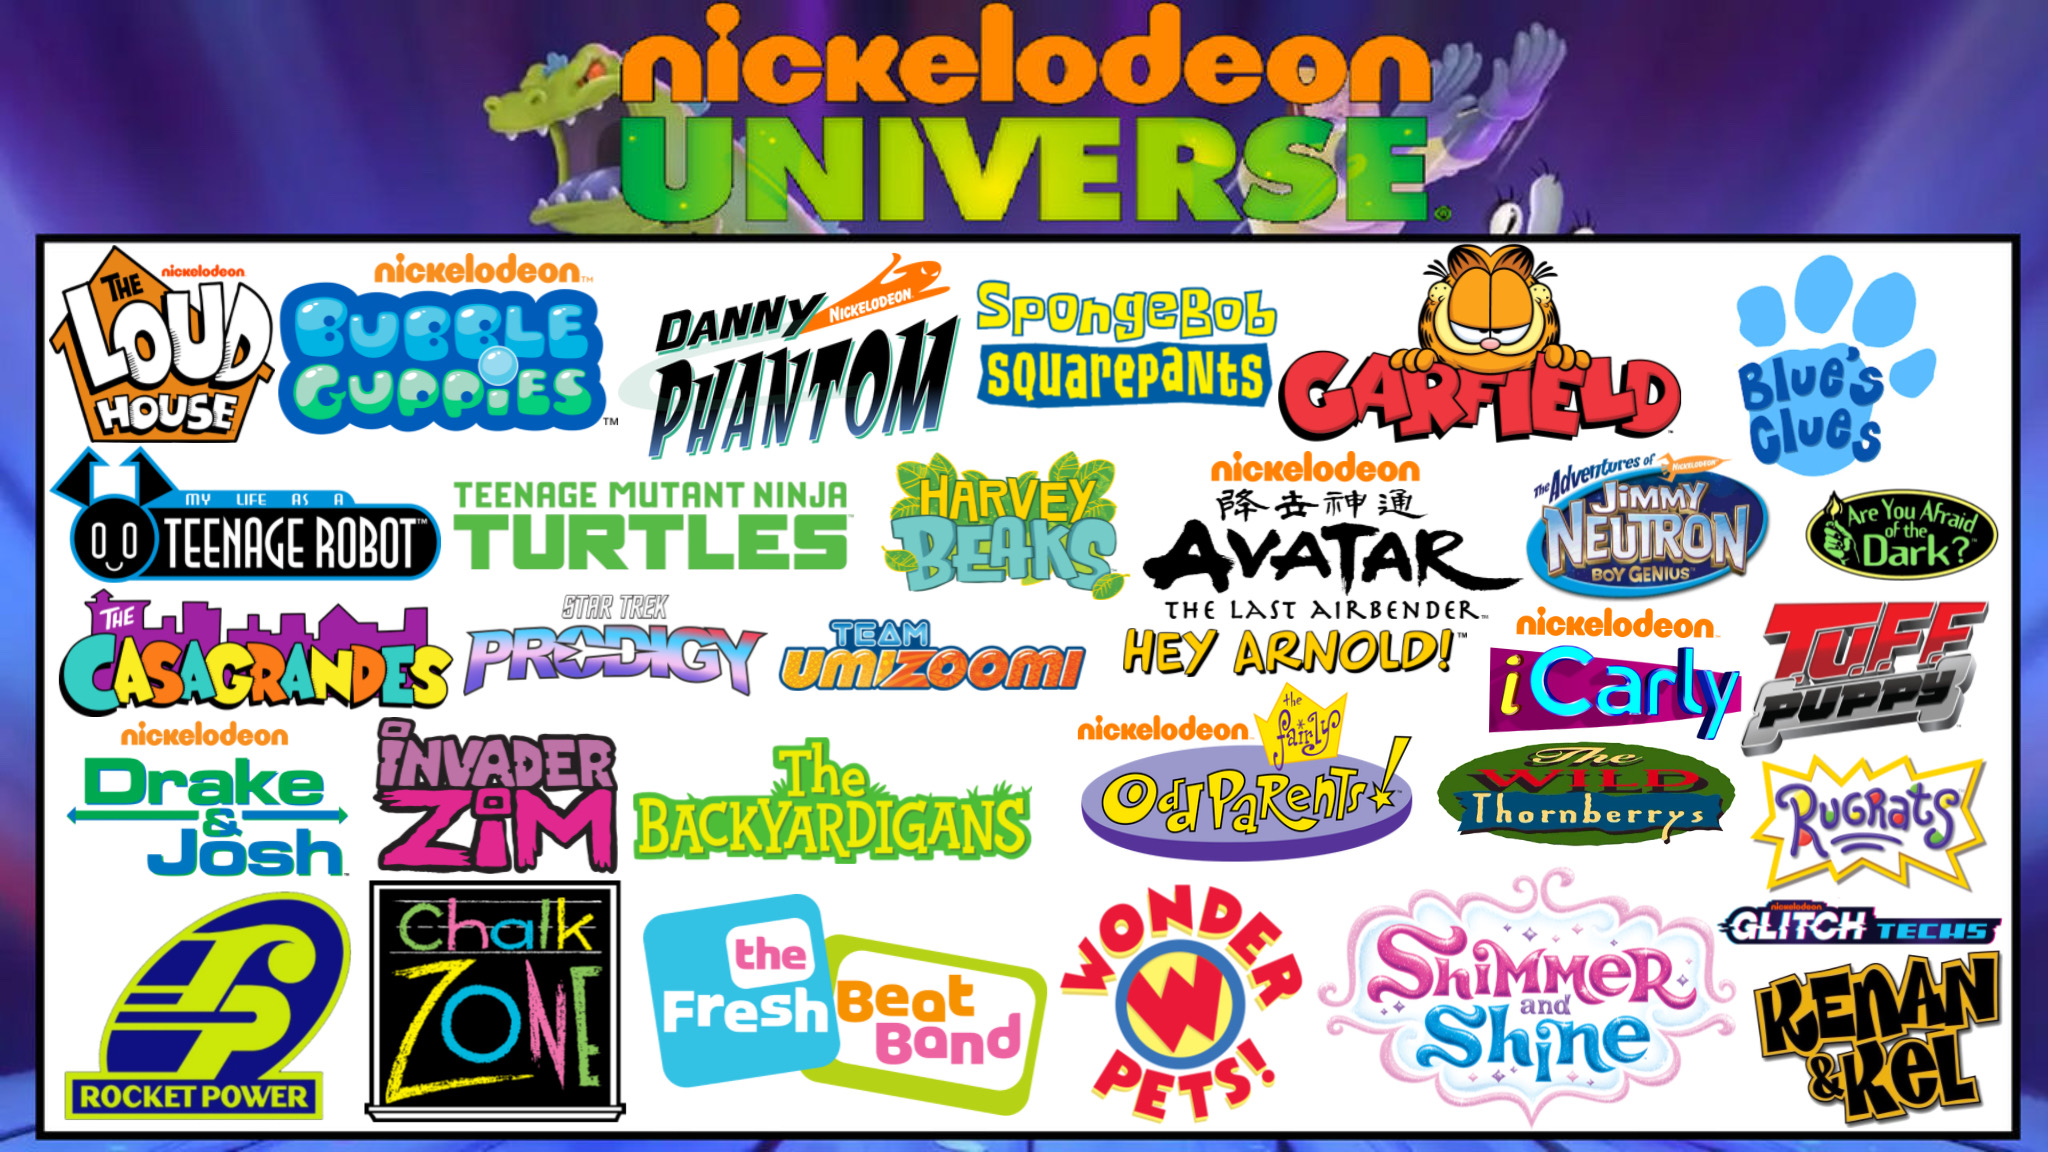 My Nickelodeon Universe by GeoNonnyJenny on DeviantArt